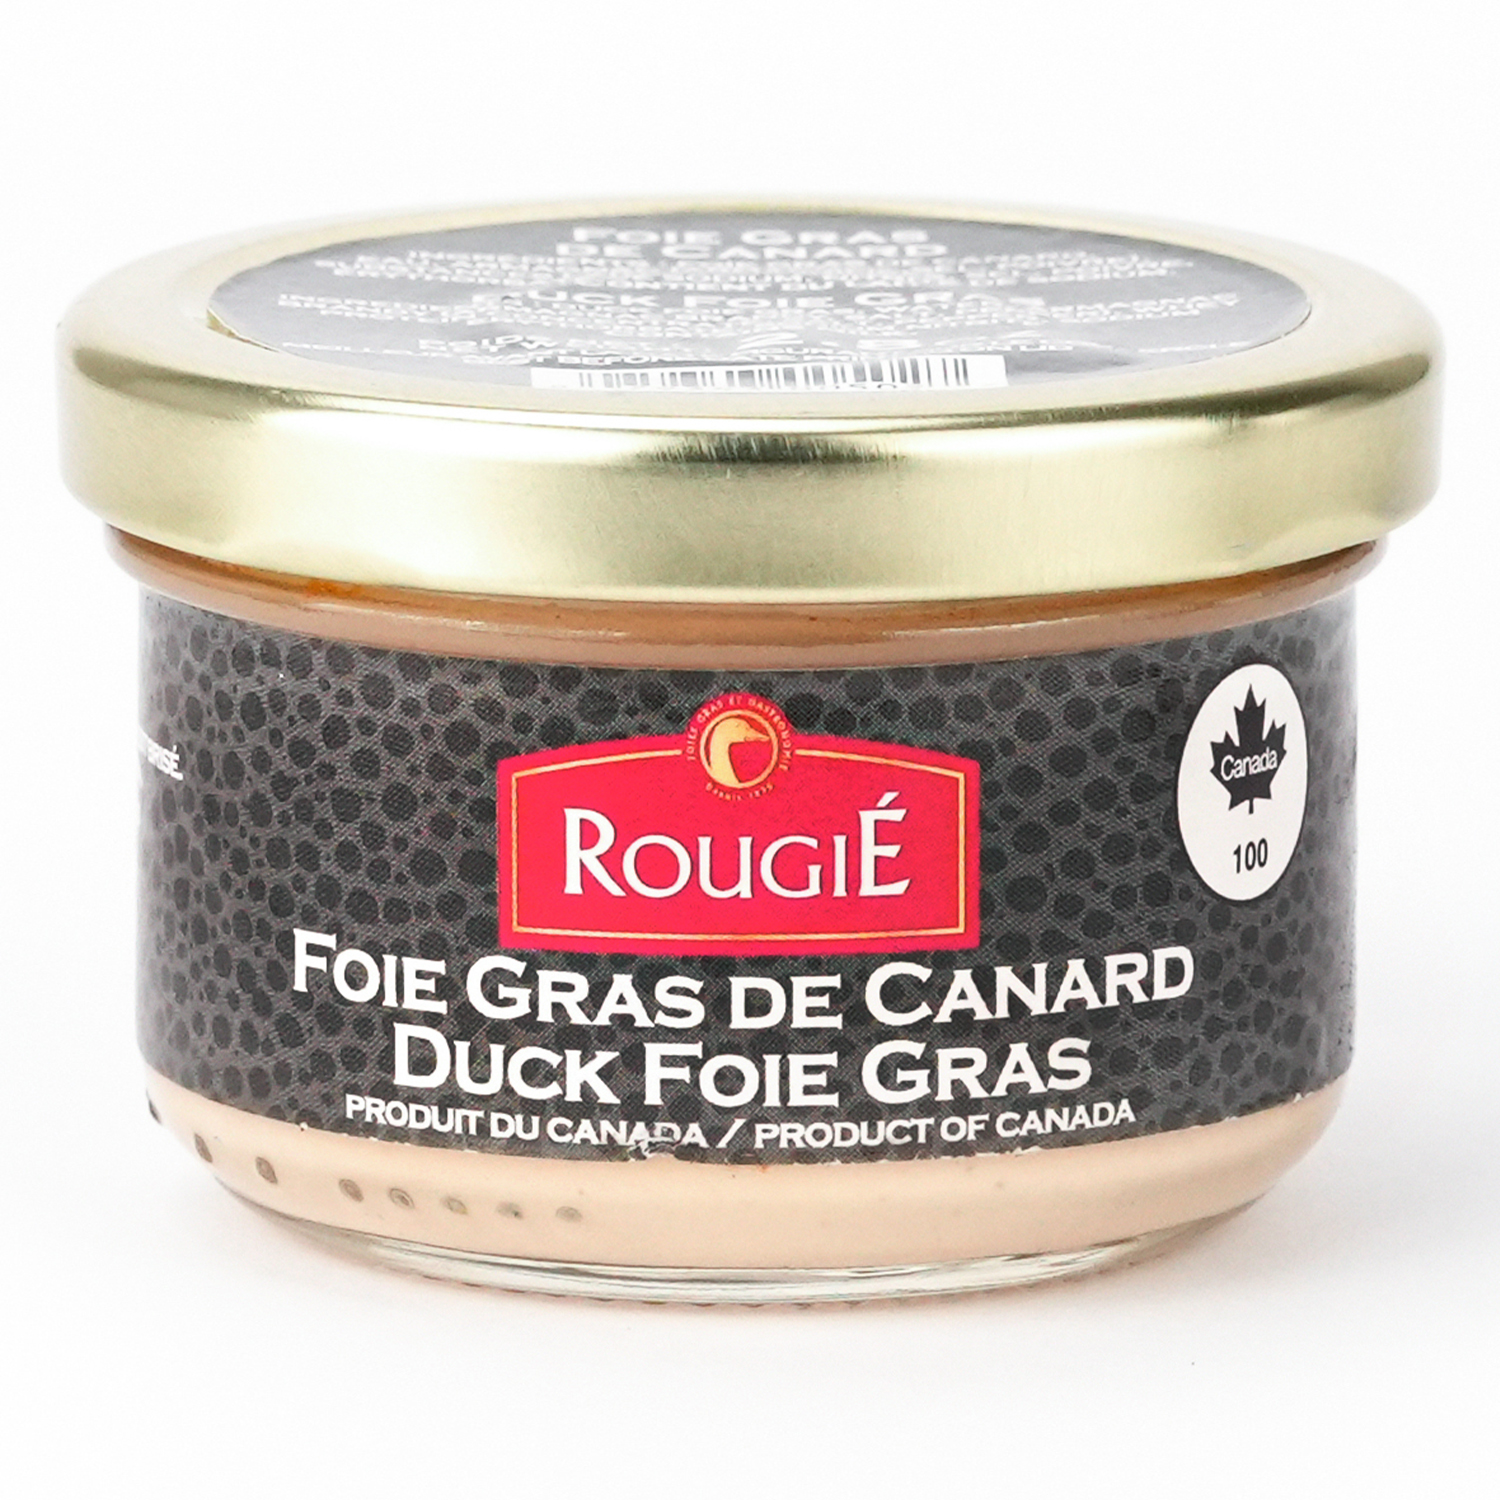 Duck Foie Gras - Micuit / Ready to Eat, Terrine, by Rougie